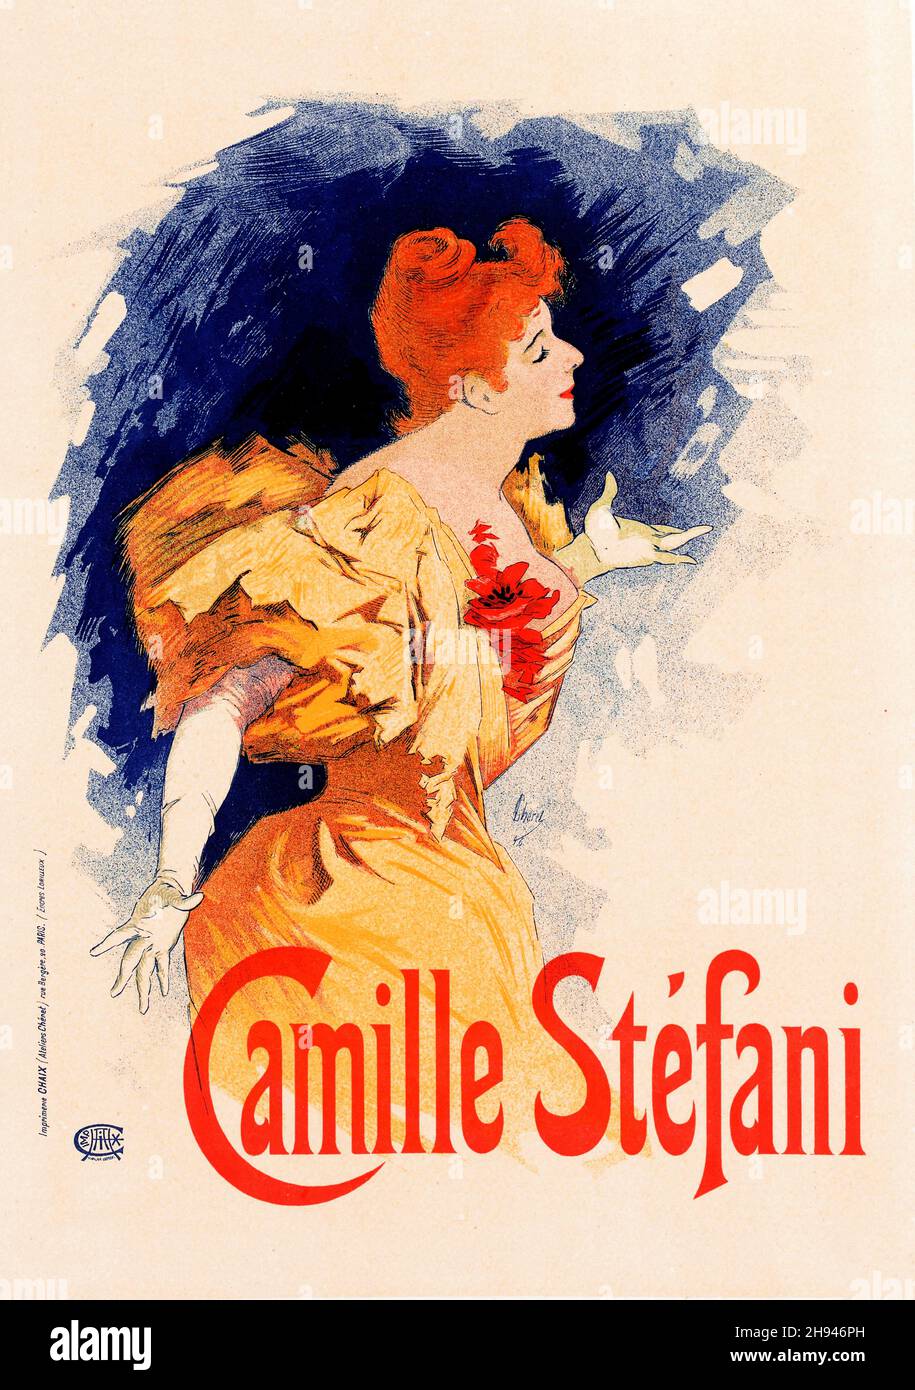 Camille Stéfani - 1897 - Poster art by Jules Chéret (1836-1932). French. Stock Photo